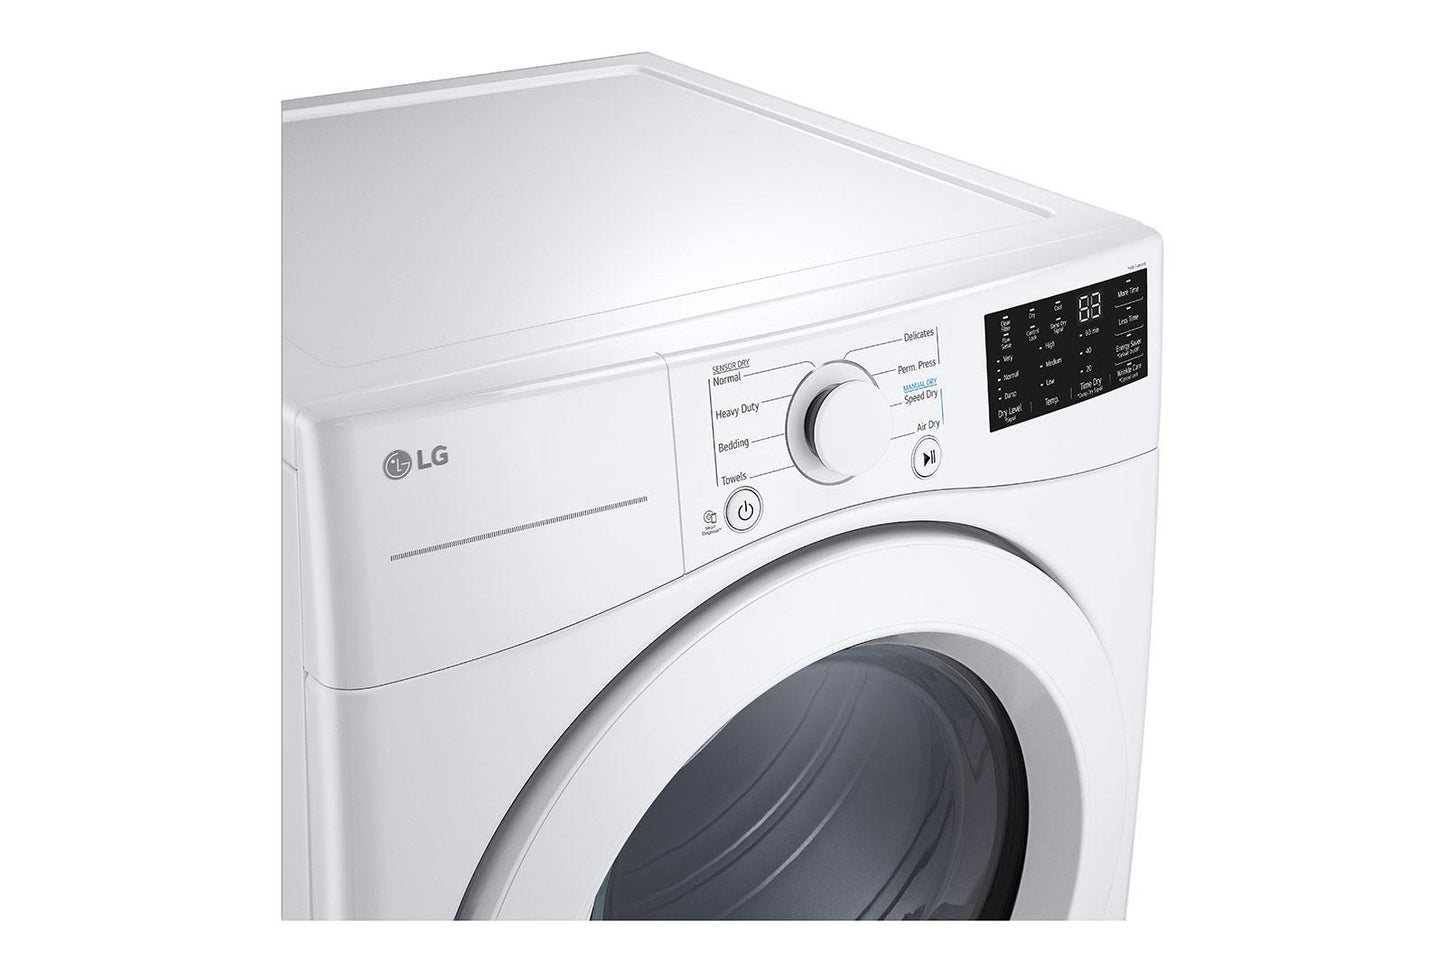 Lg DLG3471W 7.4 Cu. Ft. Ultra Large Capacity Gas Dryer